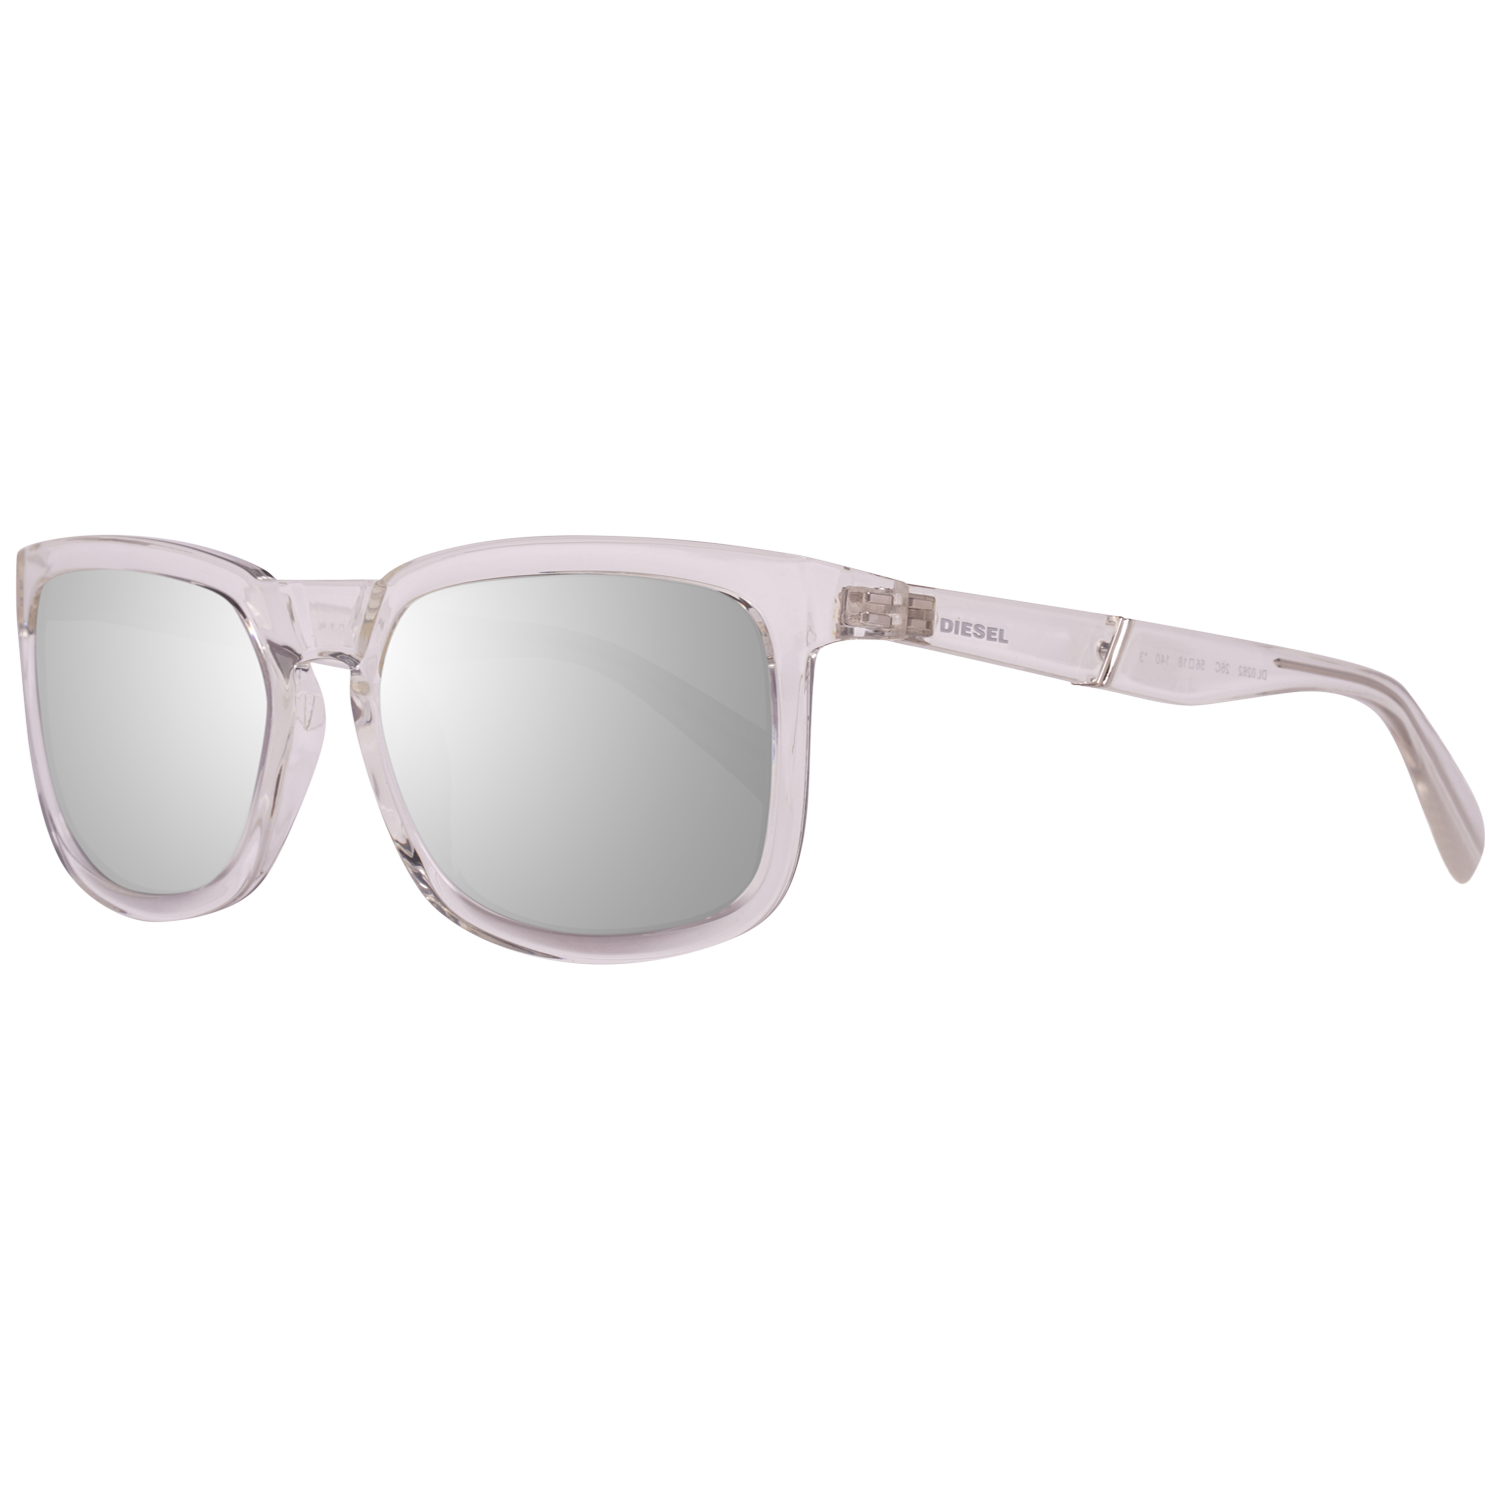 Diesel Sunglasses DL0262 26C 56